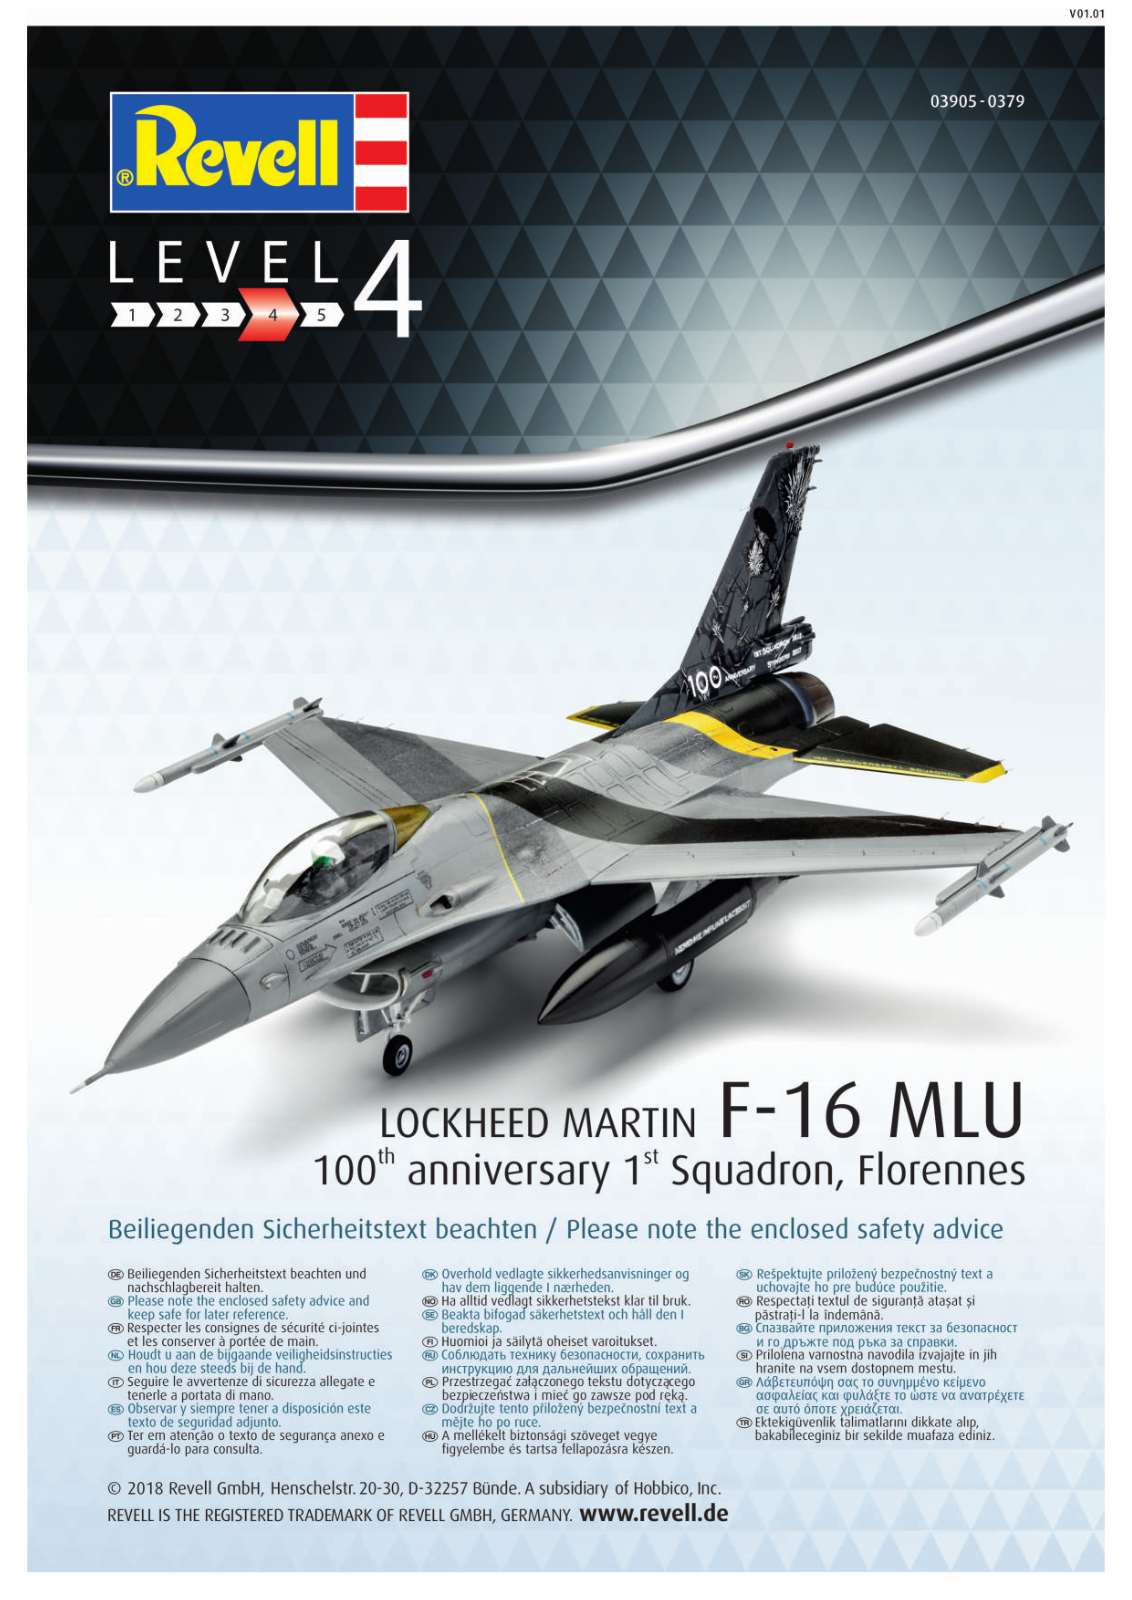 Revell Lockheed Martin F-16 MLu User Manual